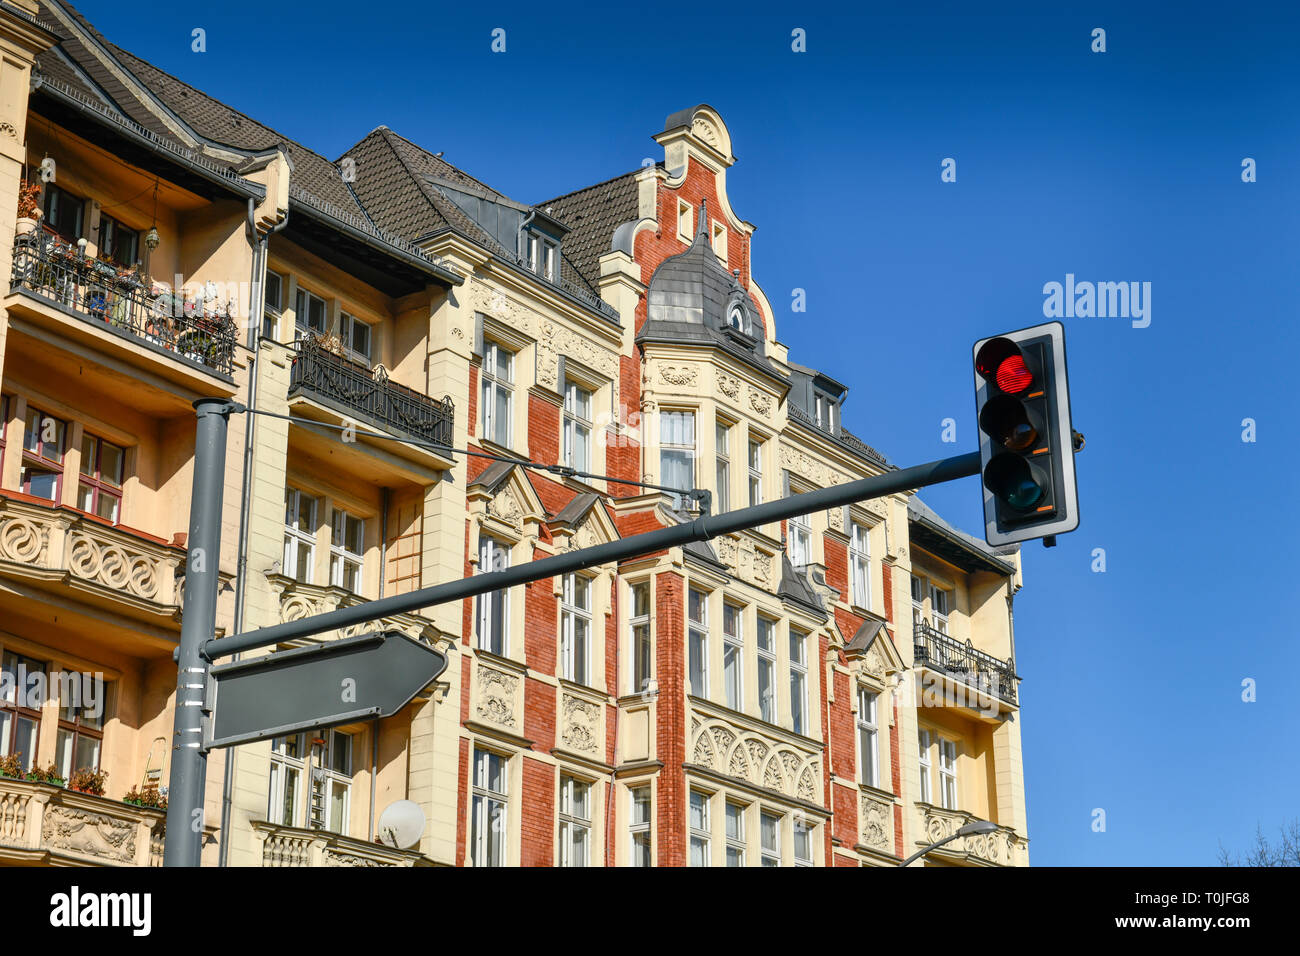 Old building, high street, beauty's mountain, Berlin, Germany, Altbau, Hauptstraße, Schoeneberg, Deutschland Stock Photo